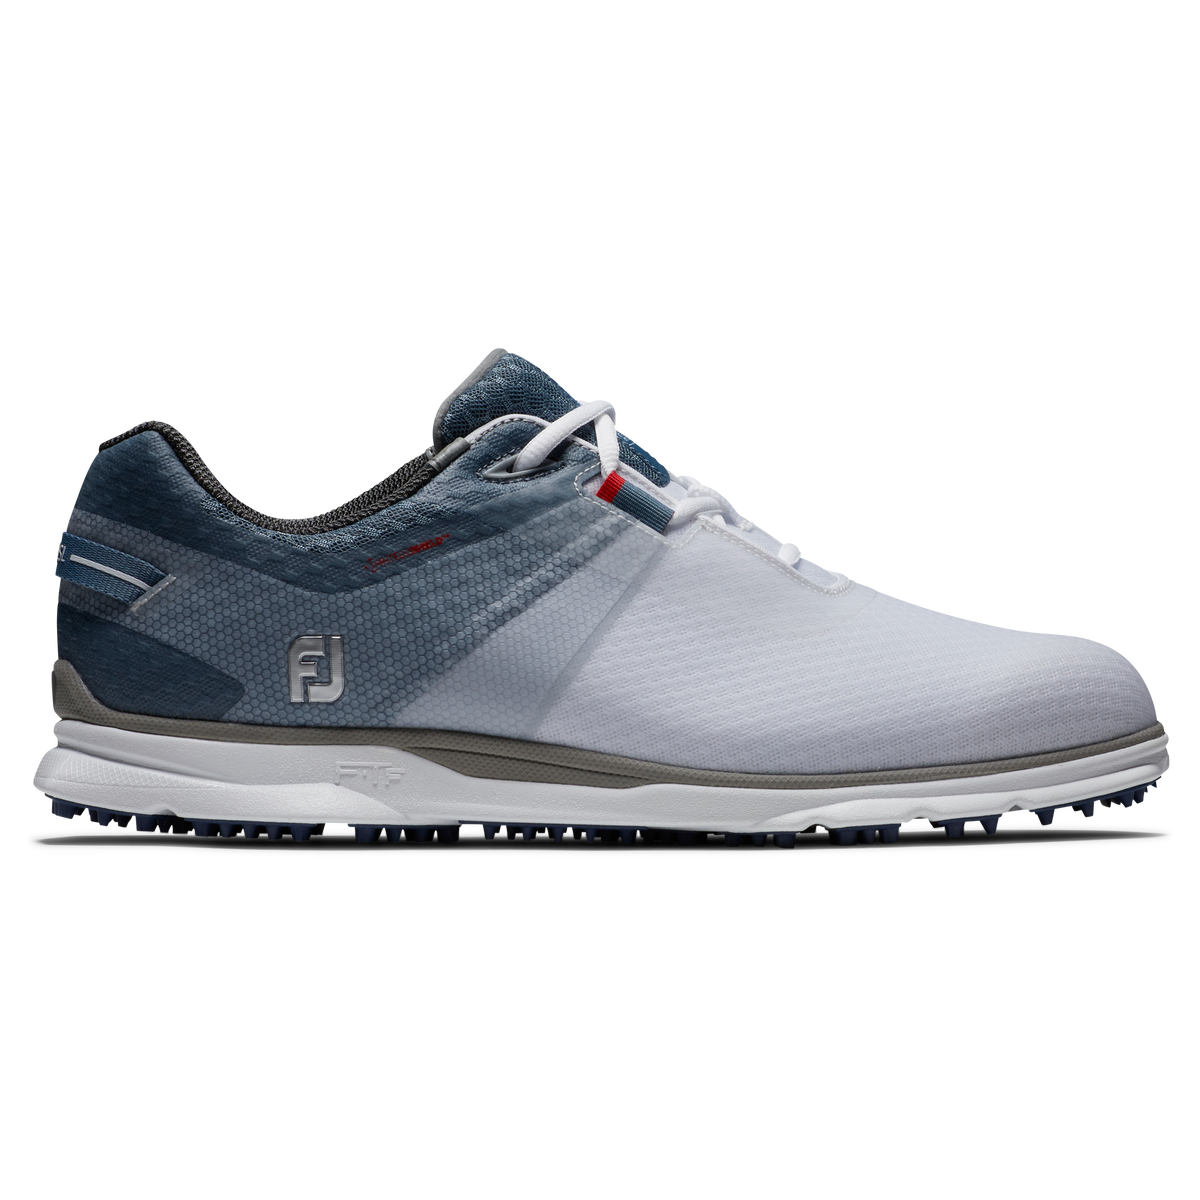 FootJoy Pro,SL Sport Mens Golf Shoe,White/Blue